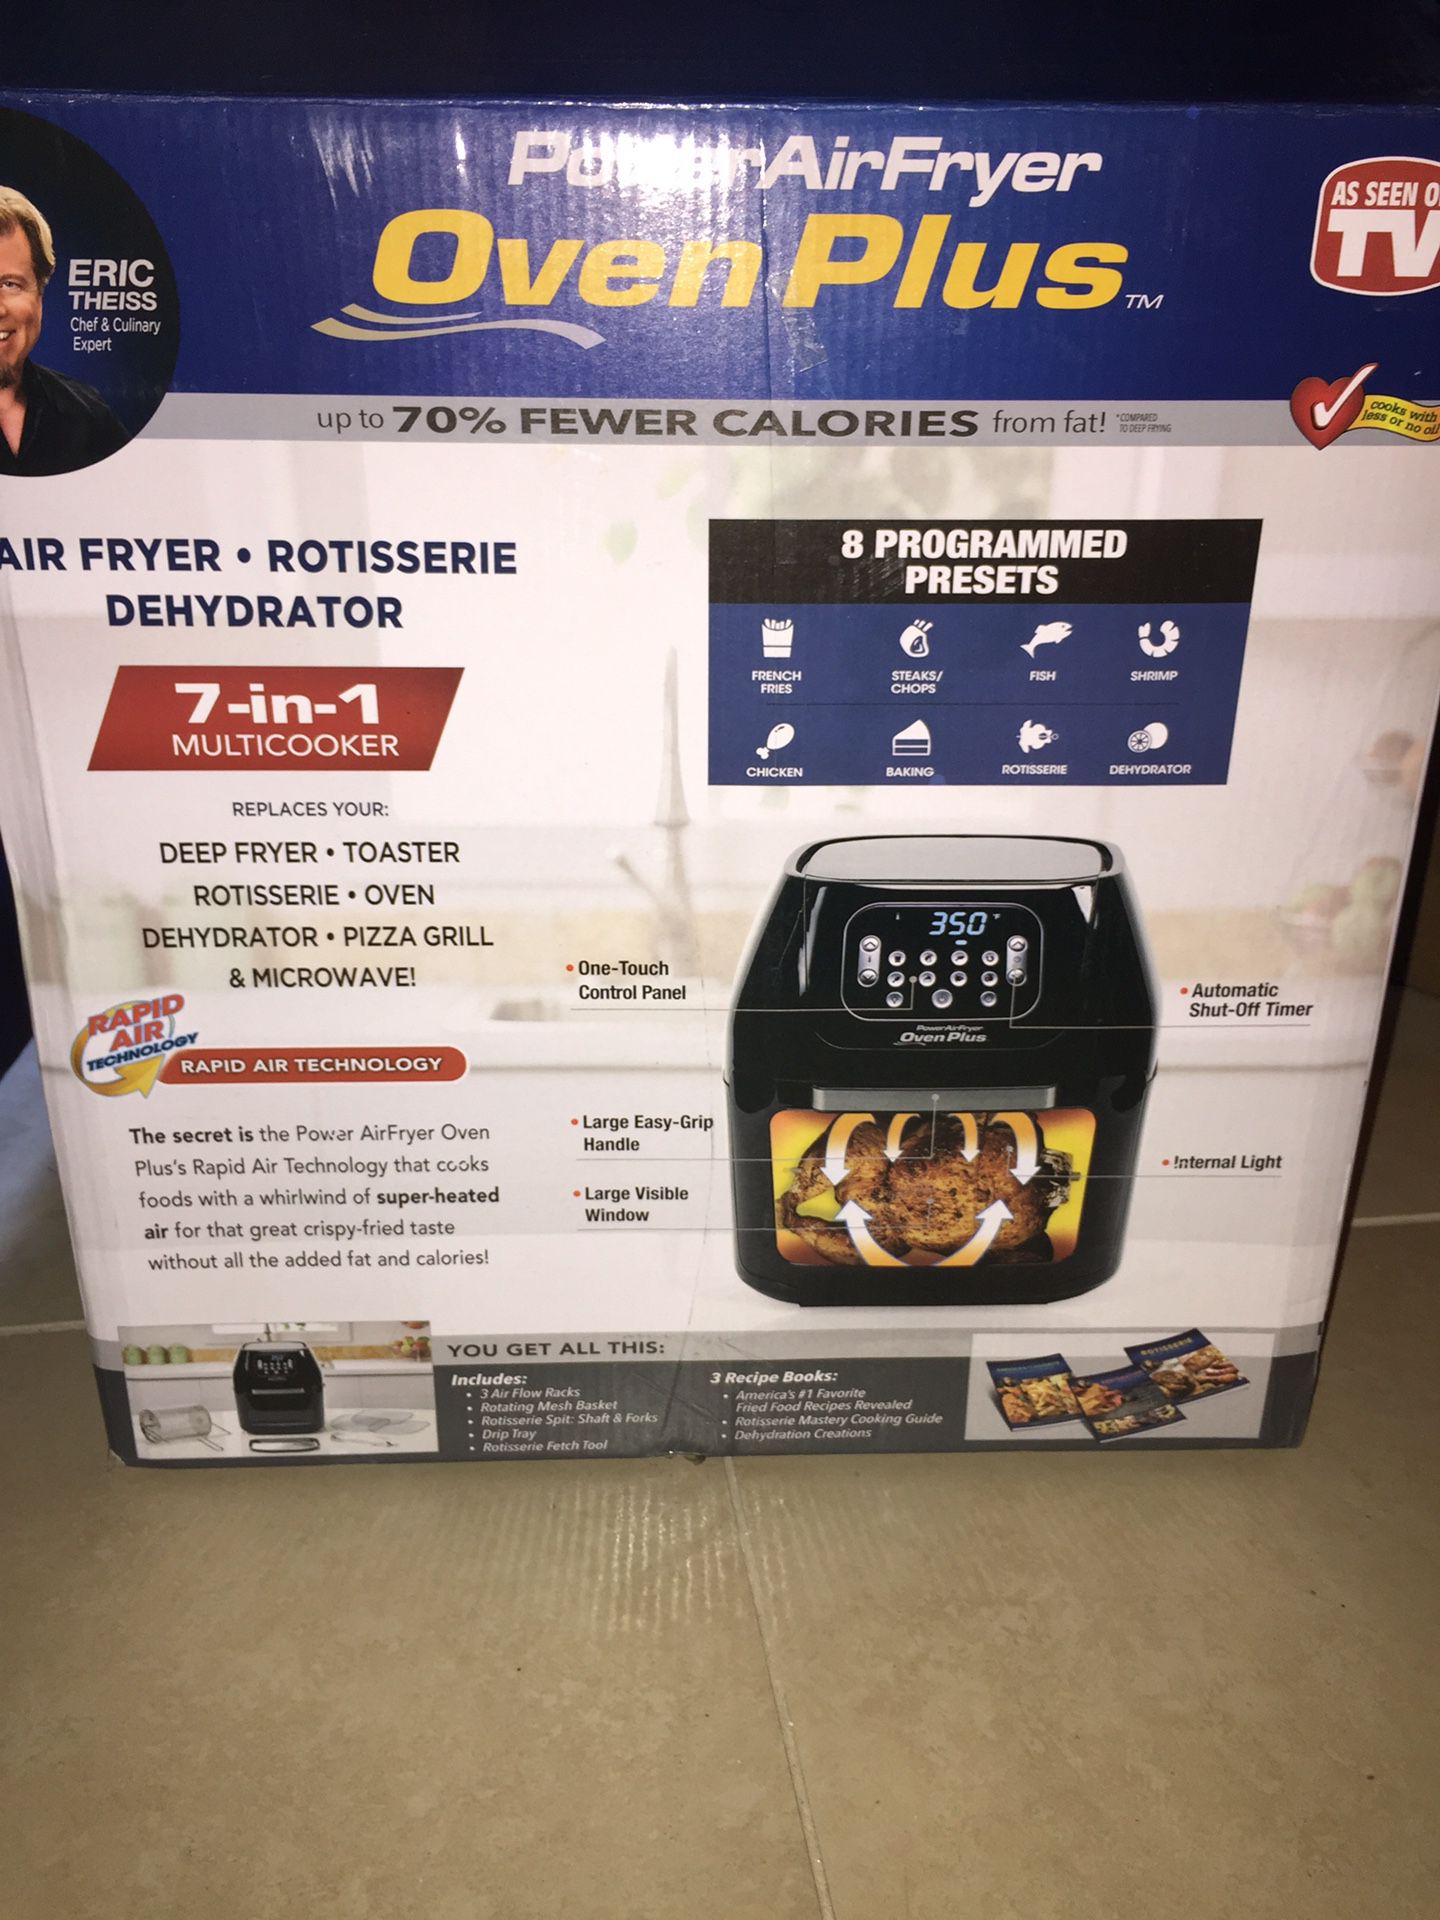 Power Air-fryer Oven Plus 7-in-1 multicooker